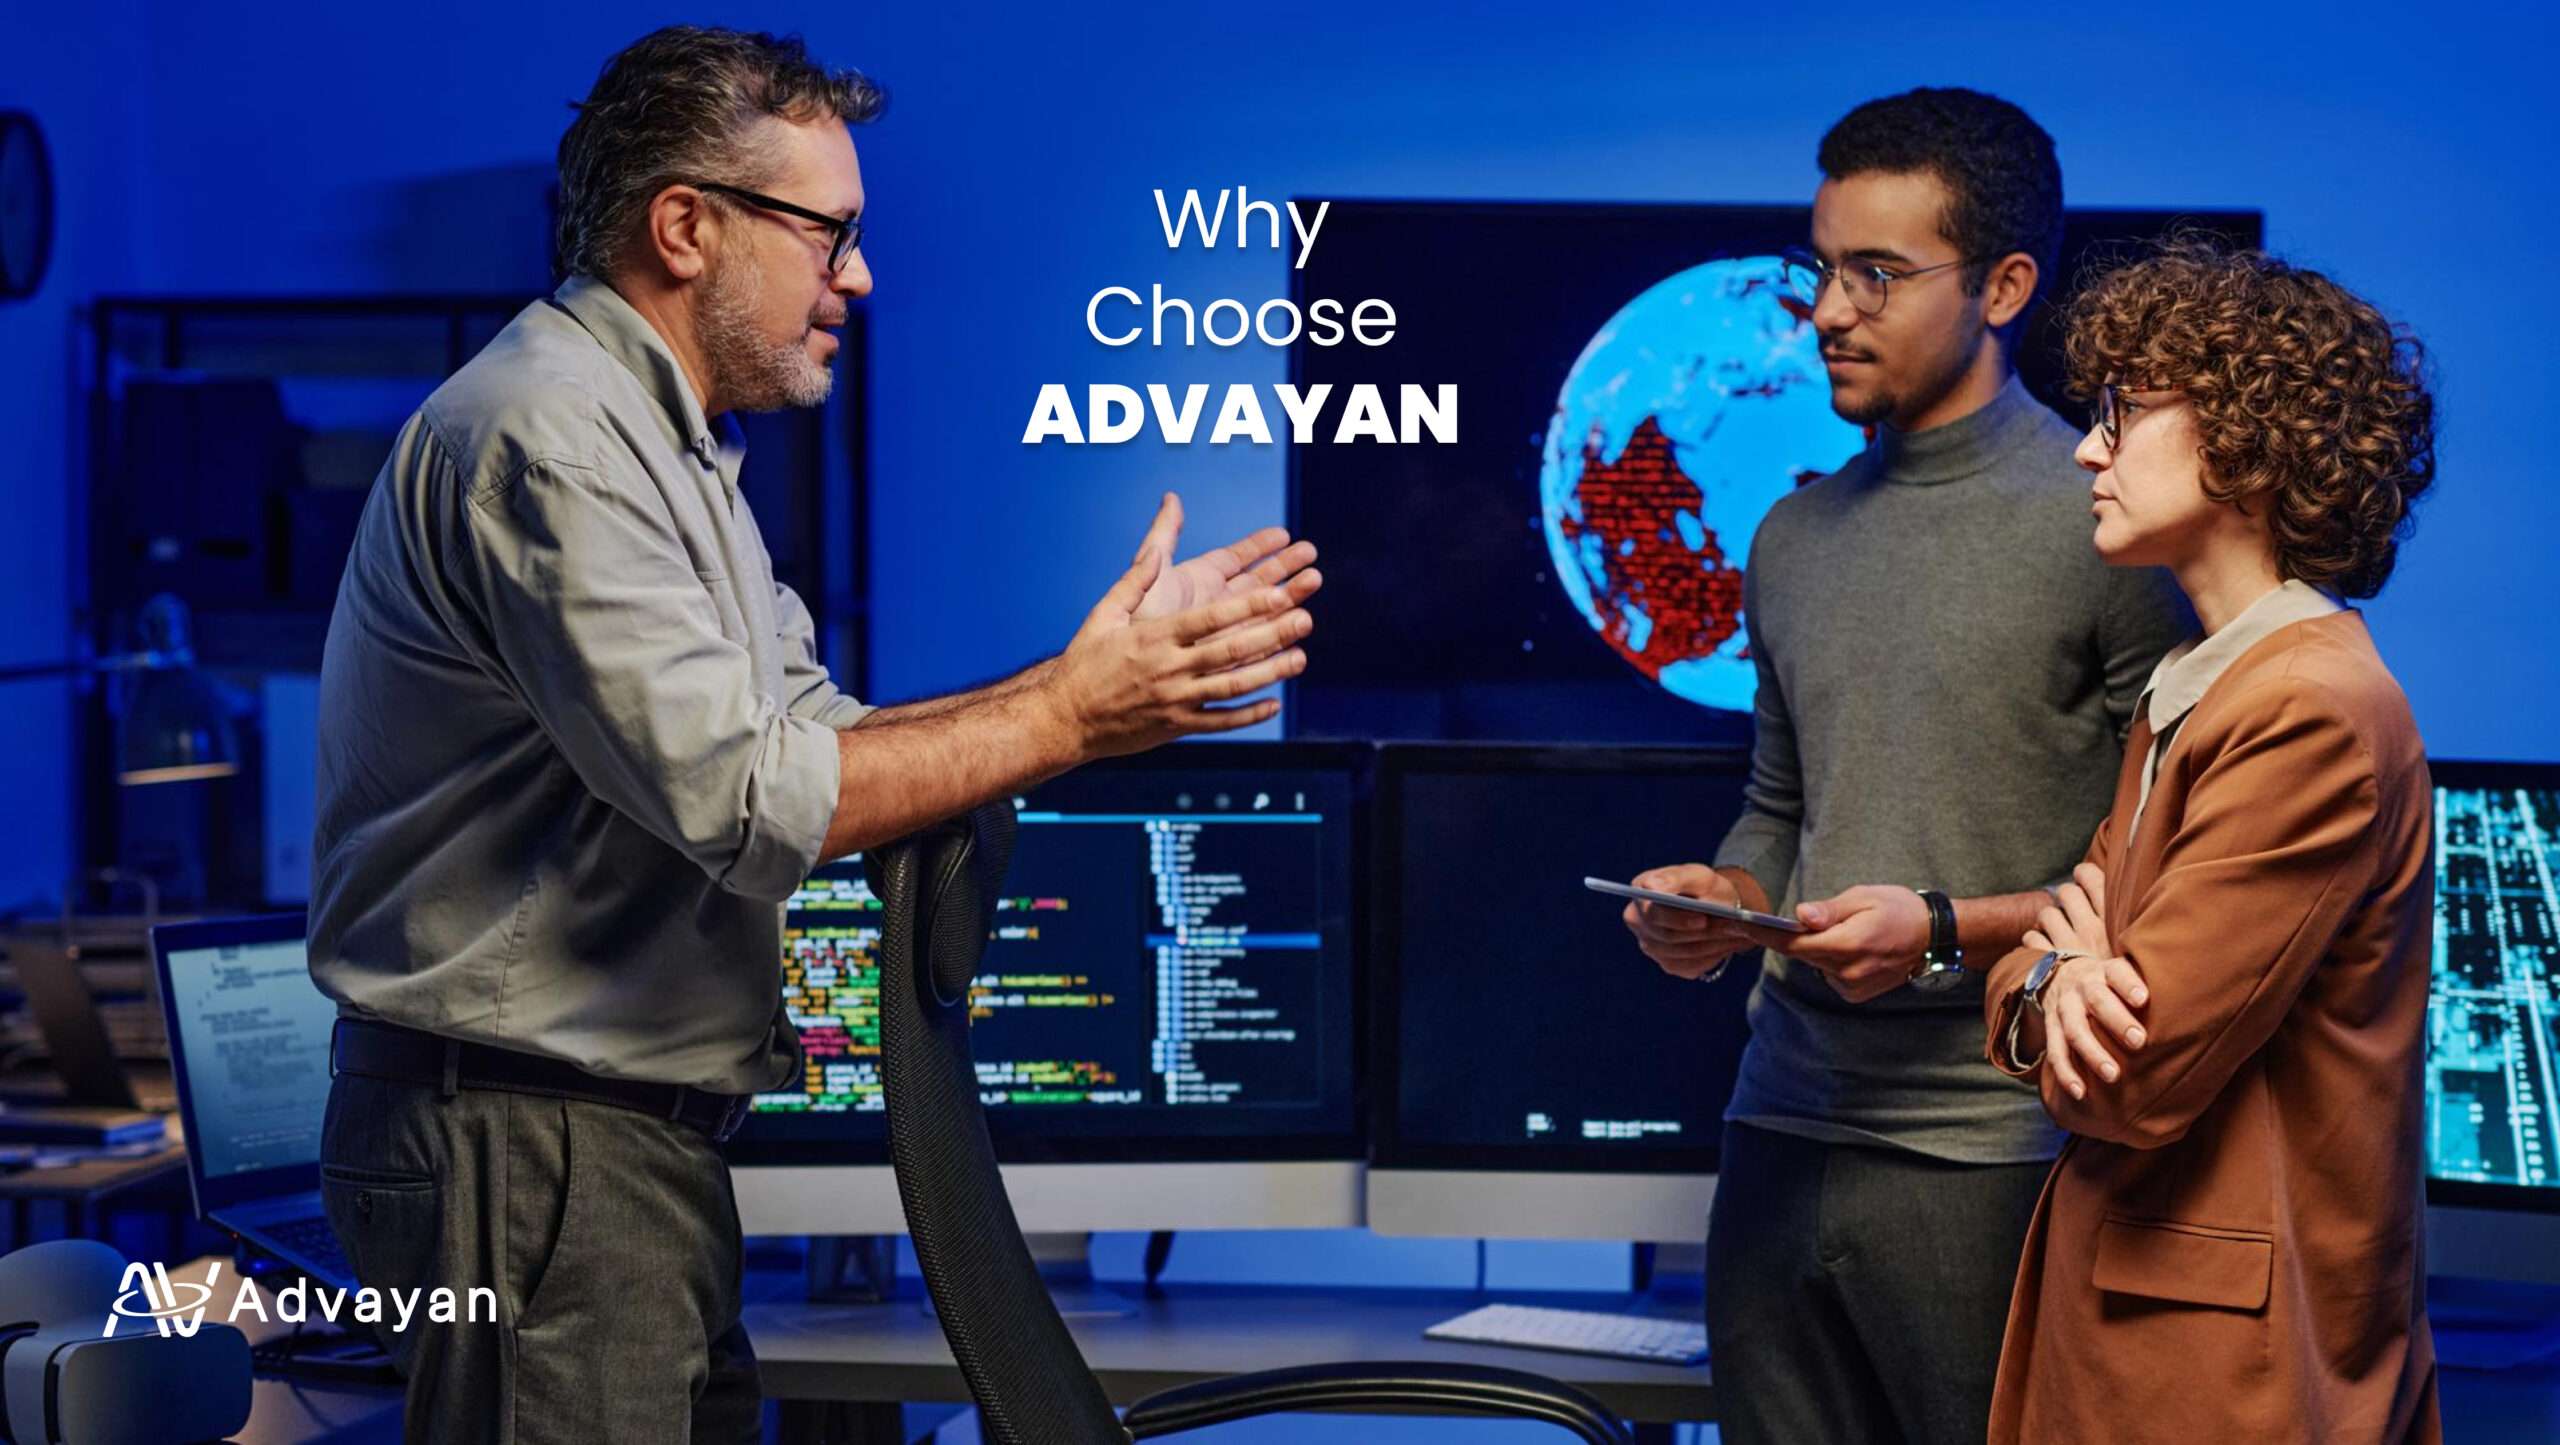 Why Choose Advayan as an OpenStack Development Service Partner